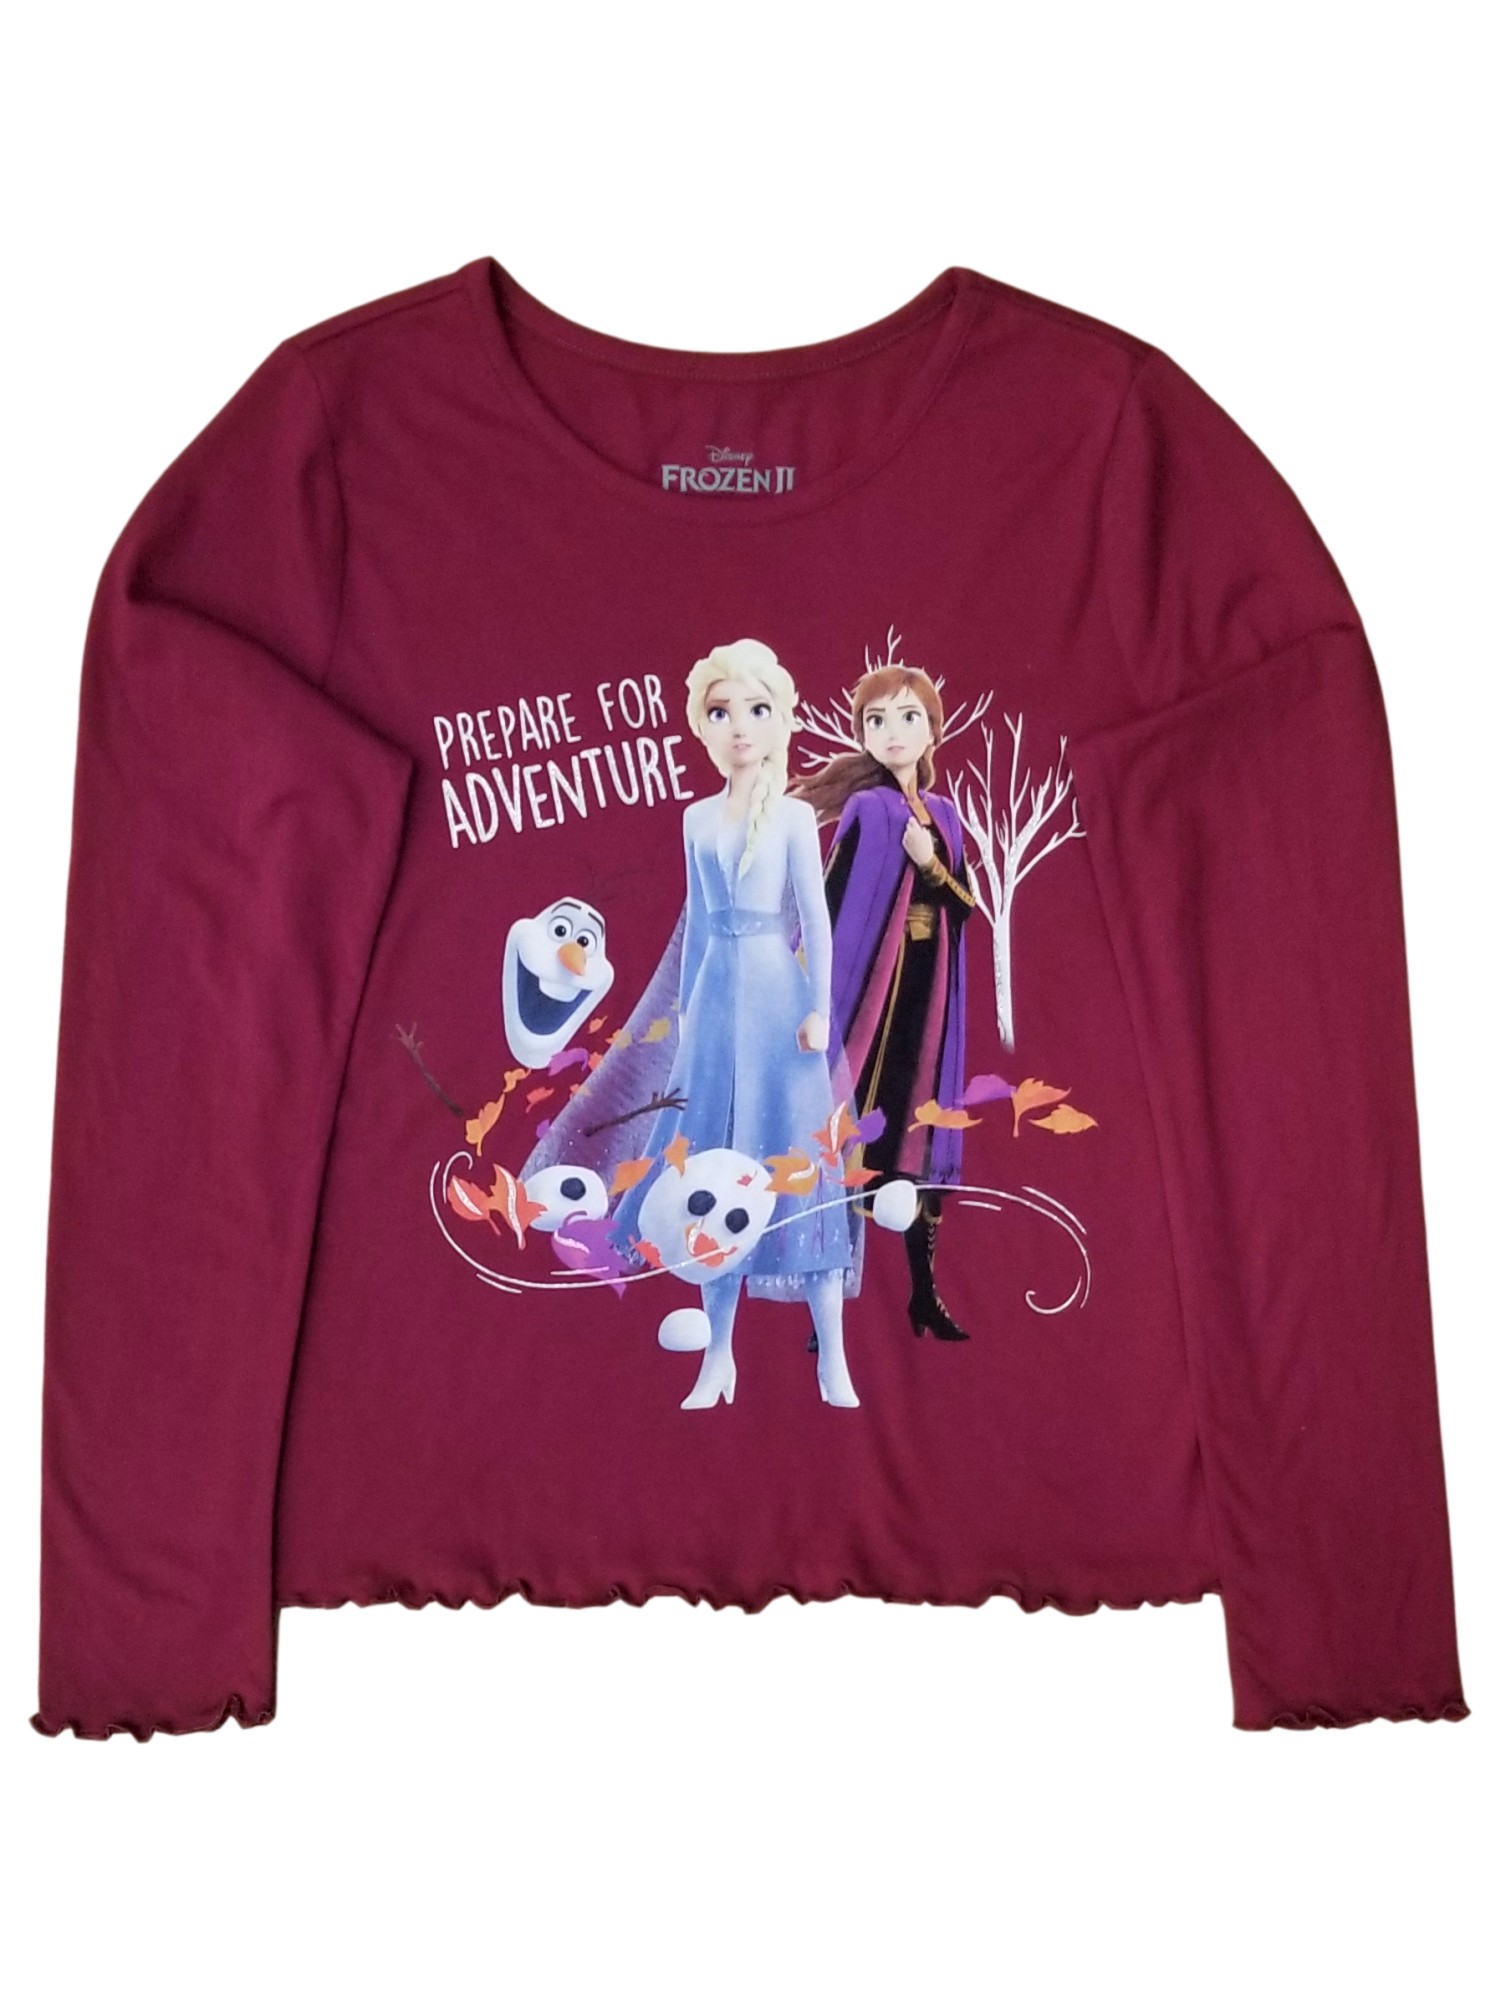 Disney Girls Frozen 2 Elsa Anna Olaf Maroon Red Long Sleeve Tee T-Shirt L 10-12